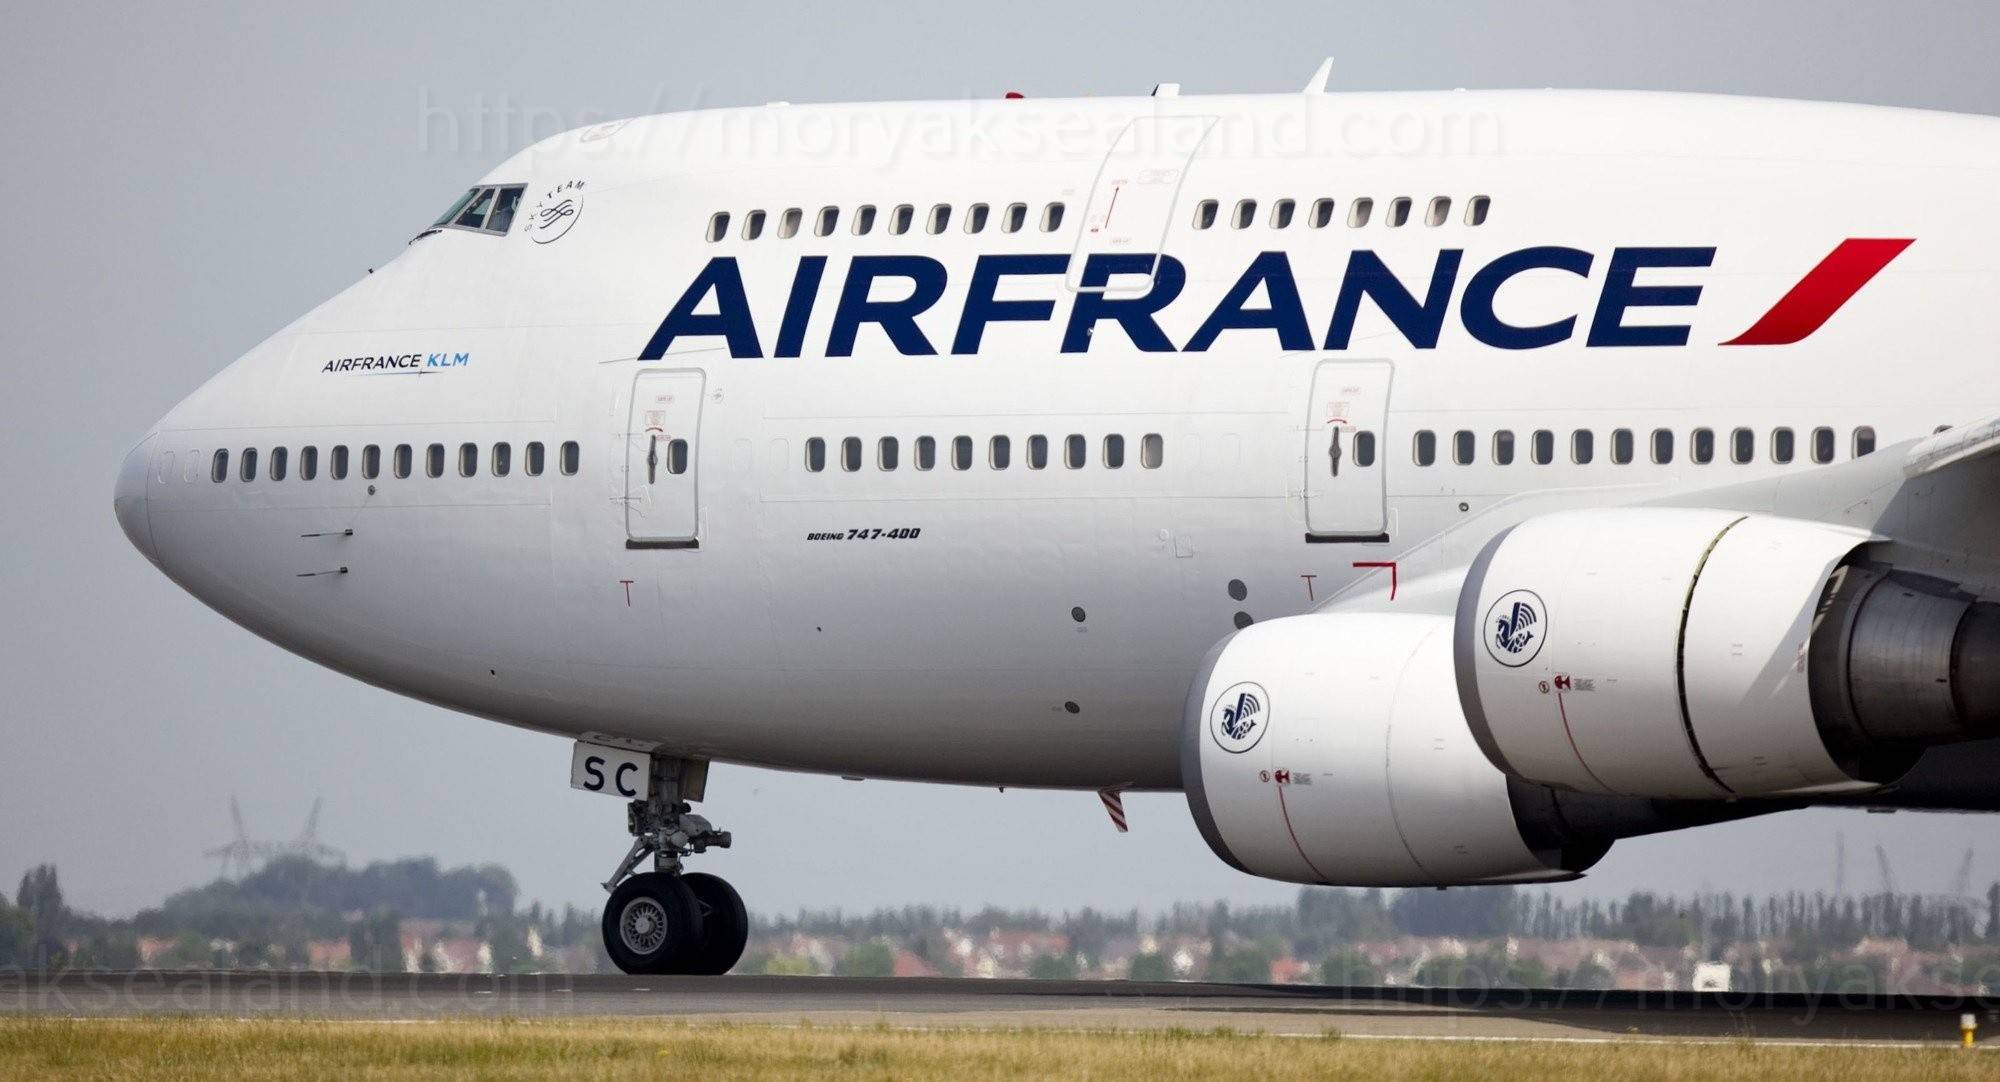 Эйр франс официальный сайт на русском языке, авиакомпания air france (airfrance)